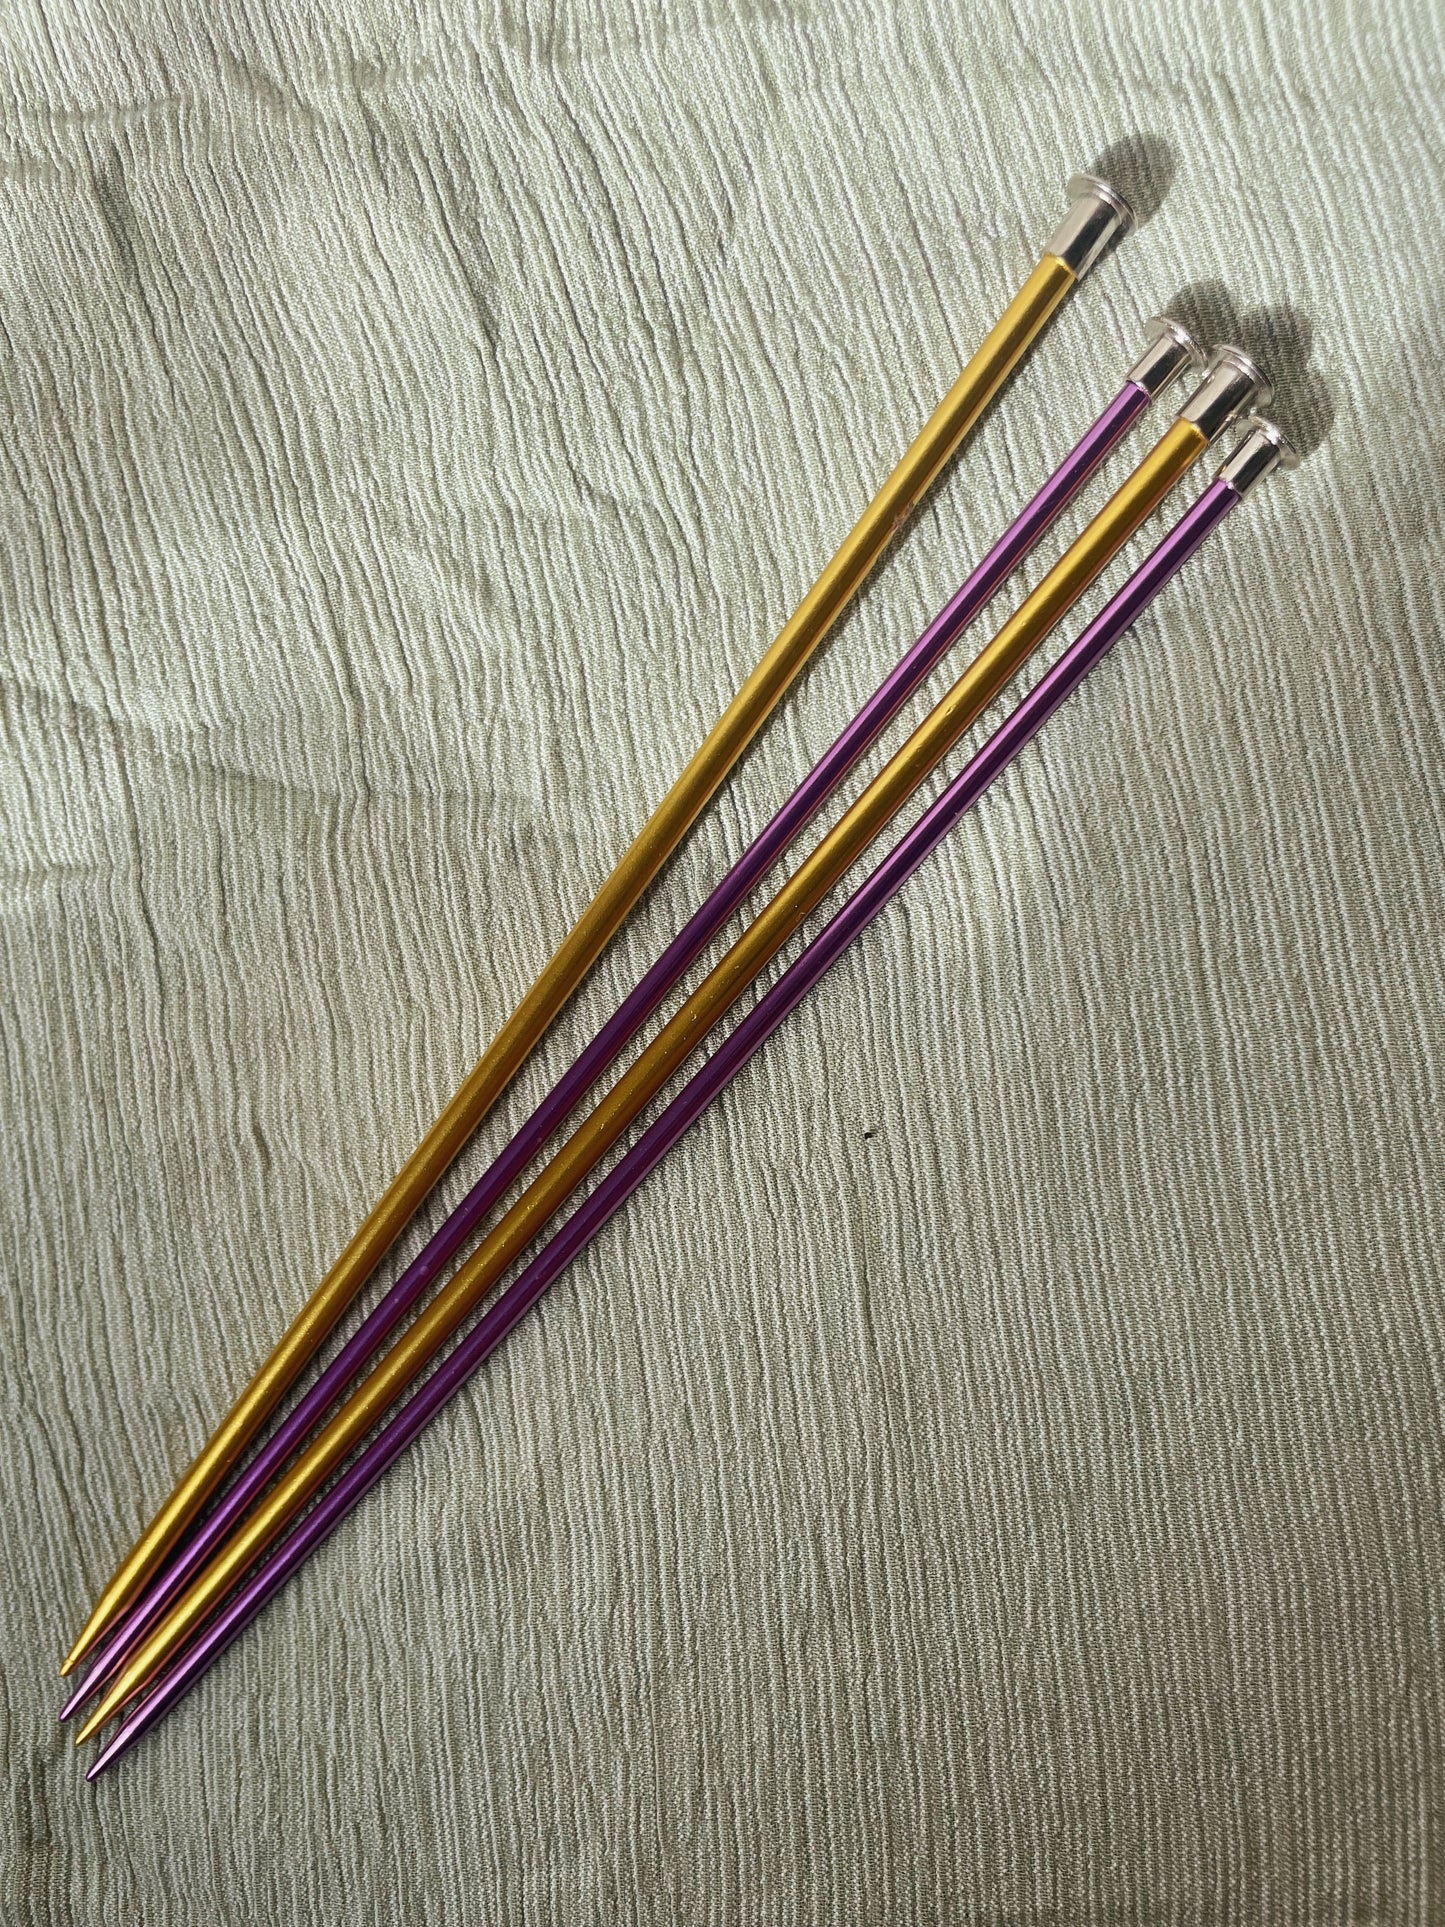 Set - 2 Straight Needles